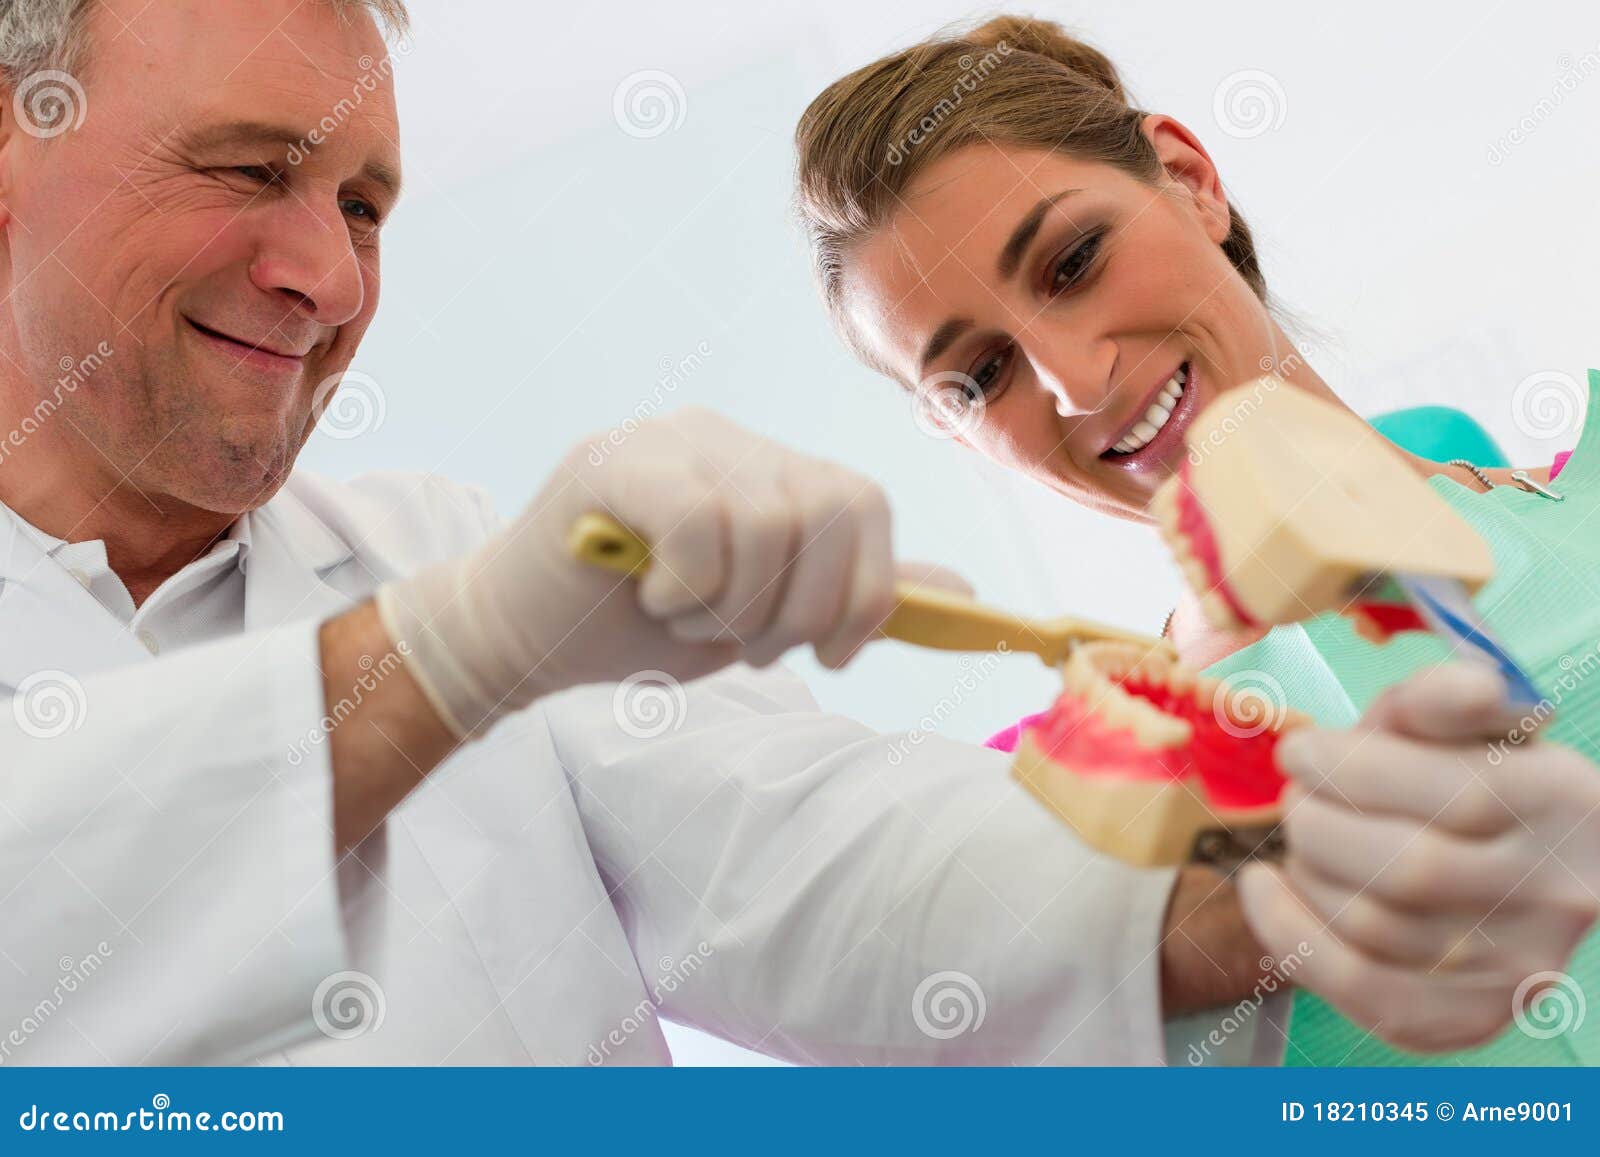 dentist explaining teeth brushing to patient